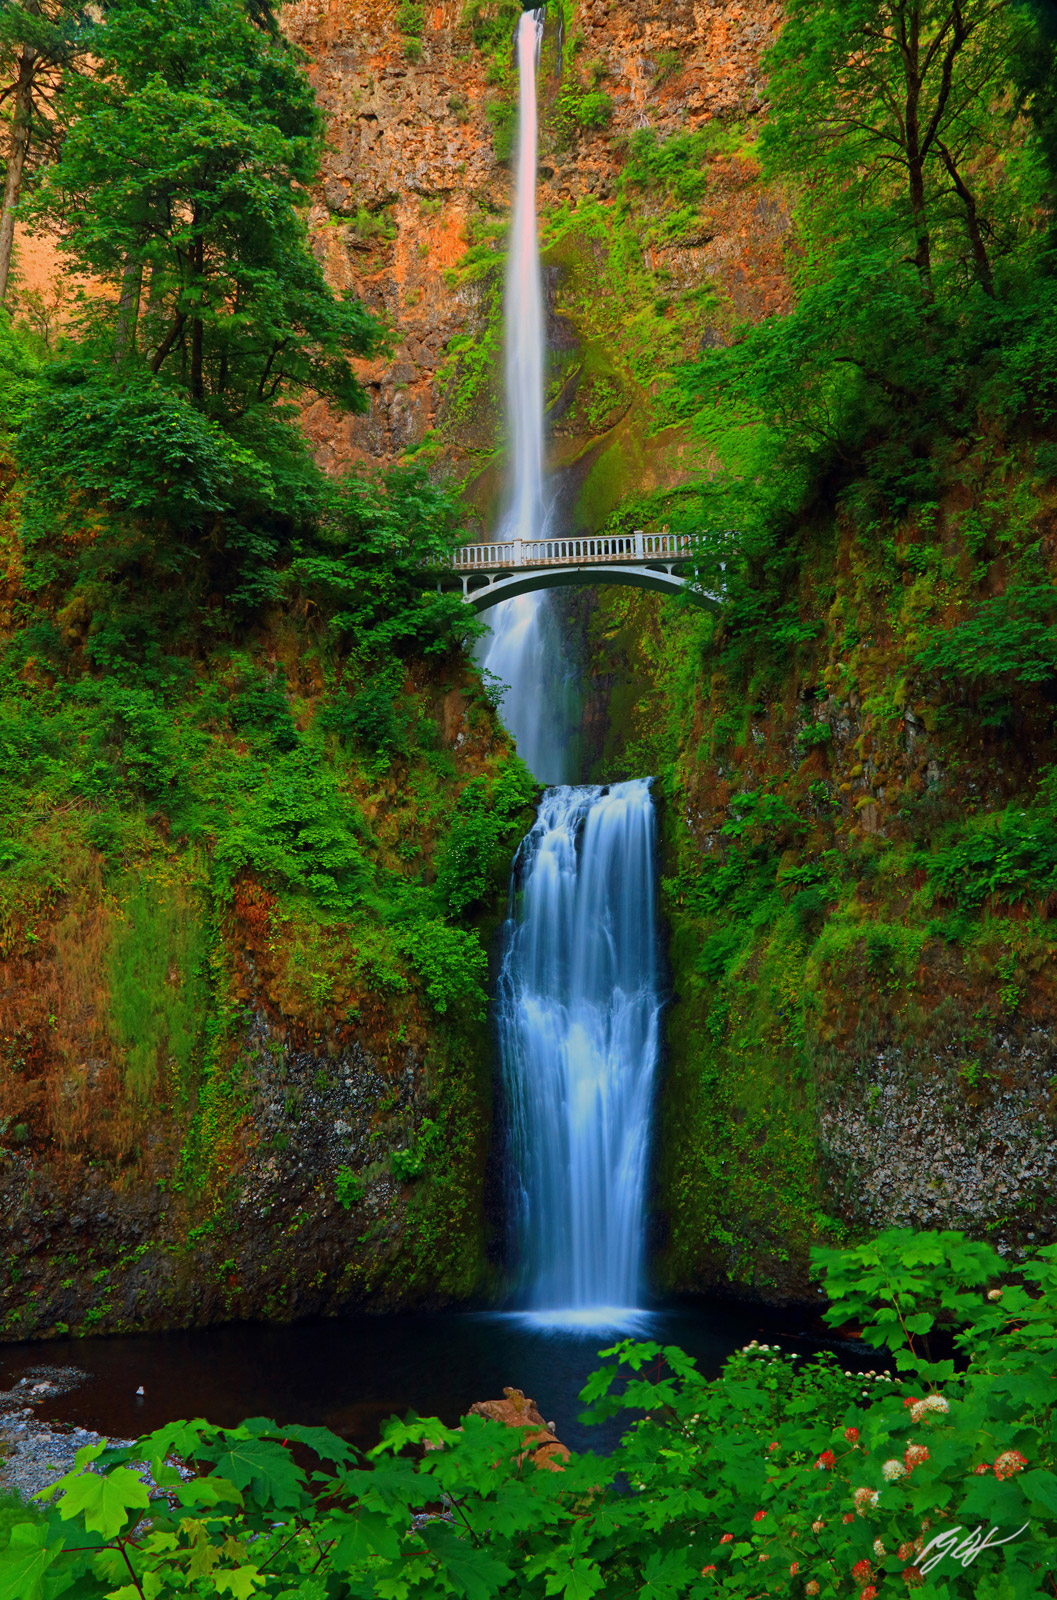 Multnomah Falls in the Columbia River Gorge National Scenic Area in Oregon